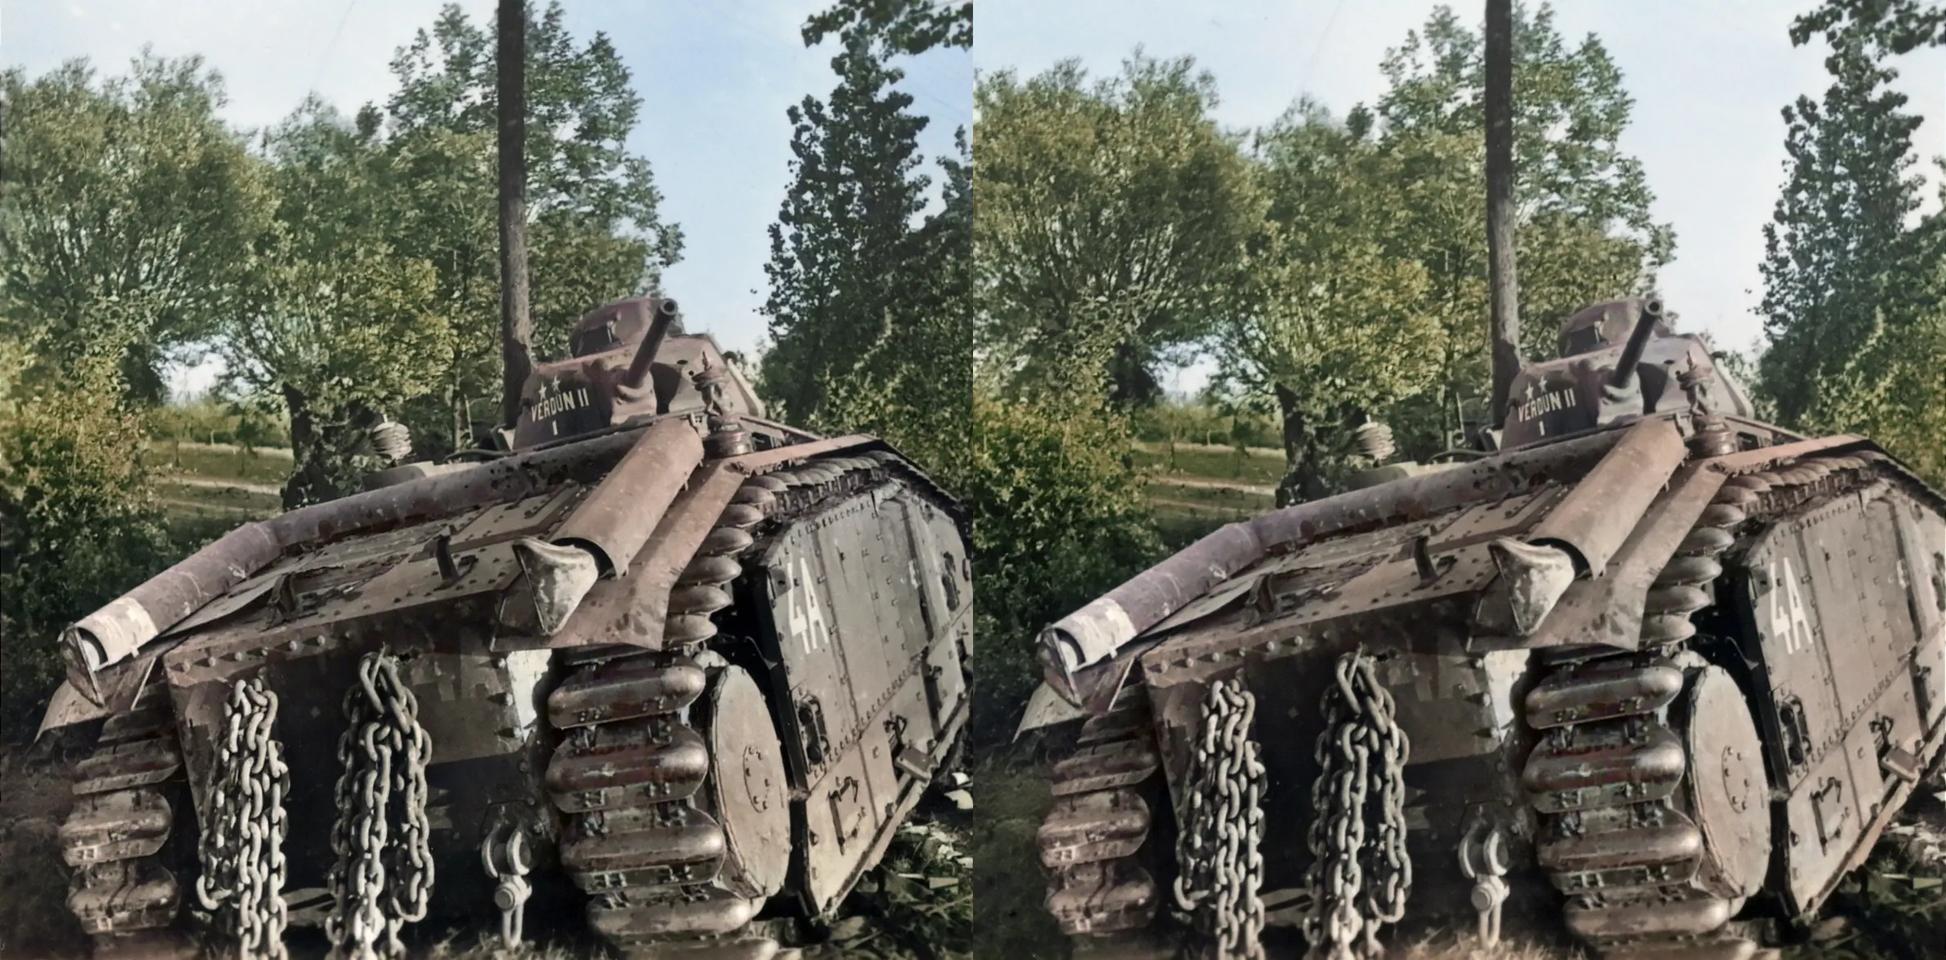 045 - Abandoned French Char B1 tank